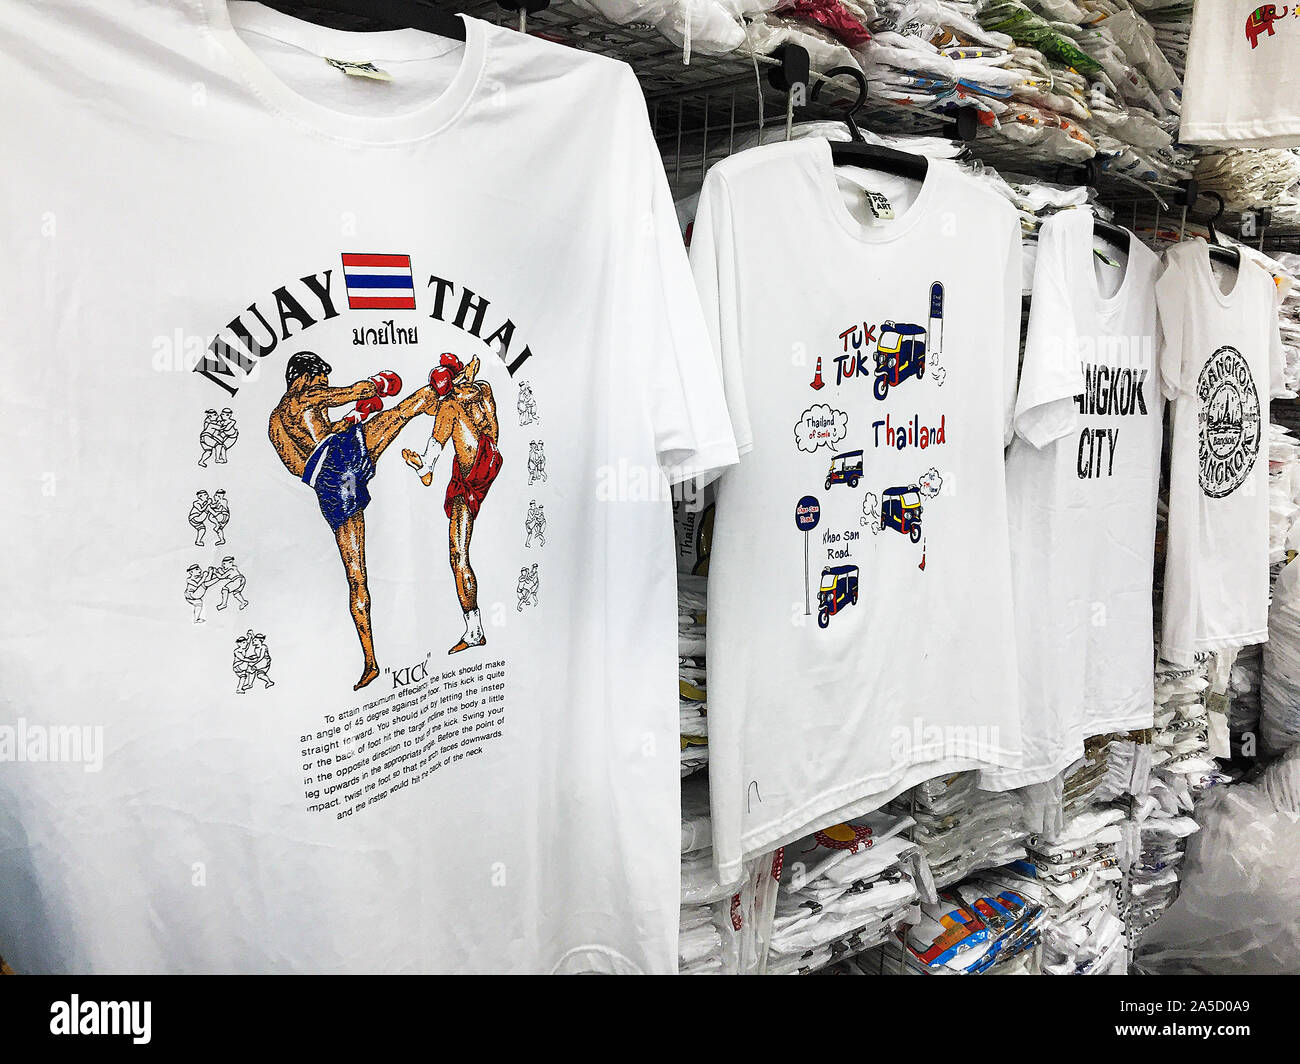 Bangkok t shirts hi-res stock photography and images - Alamy